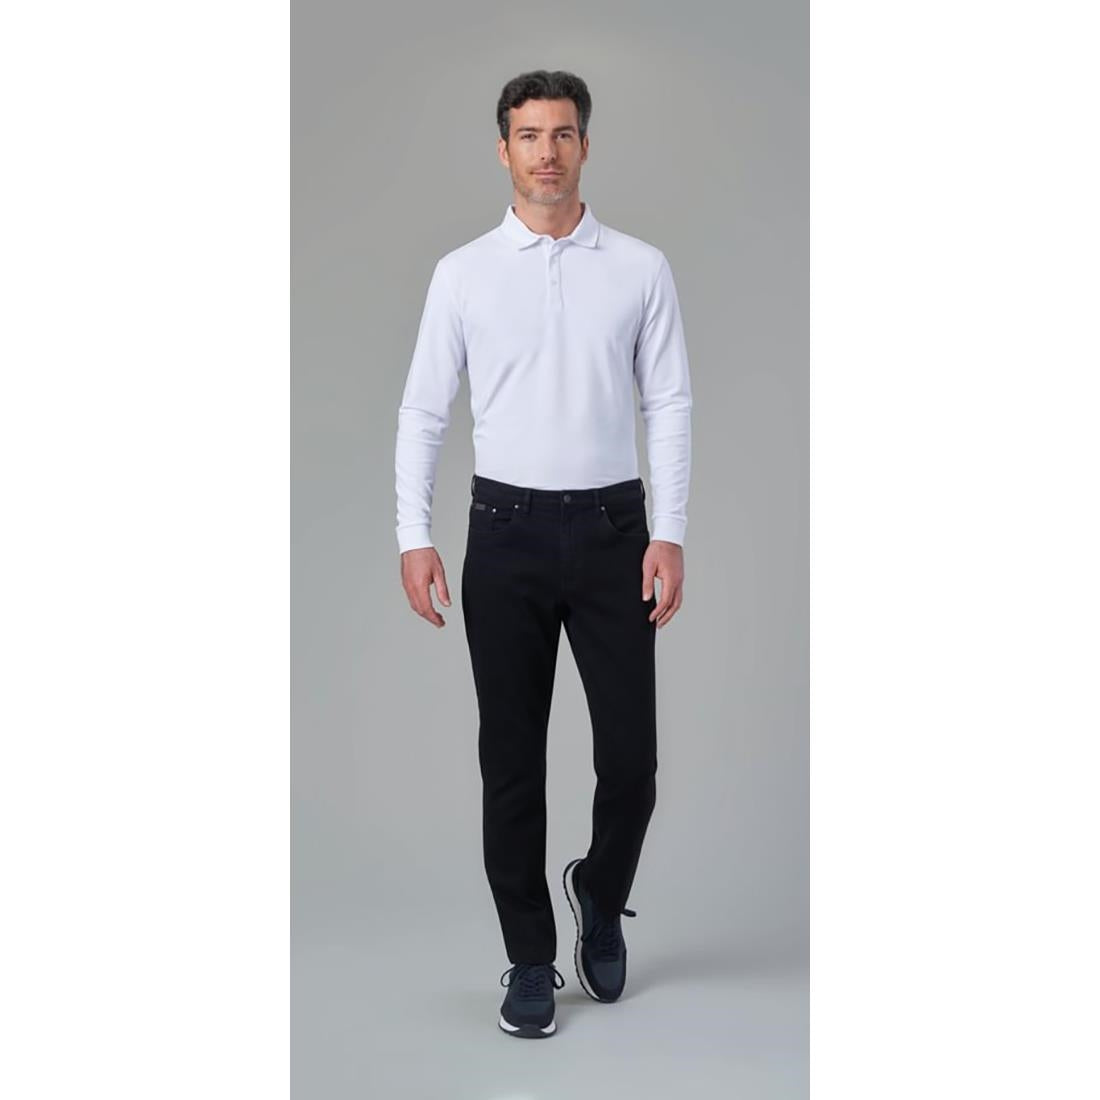 BA140-L Brook Taverner Frederick Mens Long Sleeve Polo Shirt White Size L